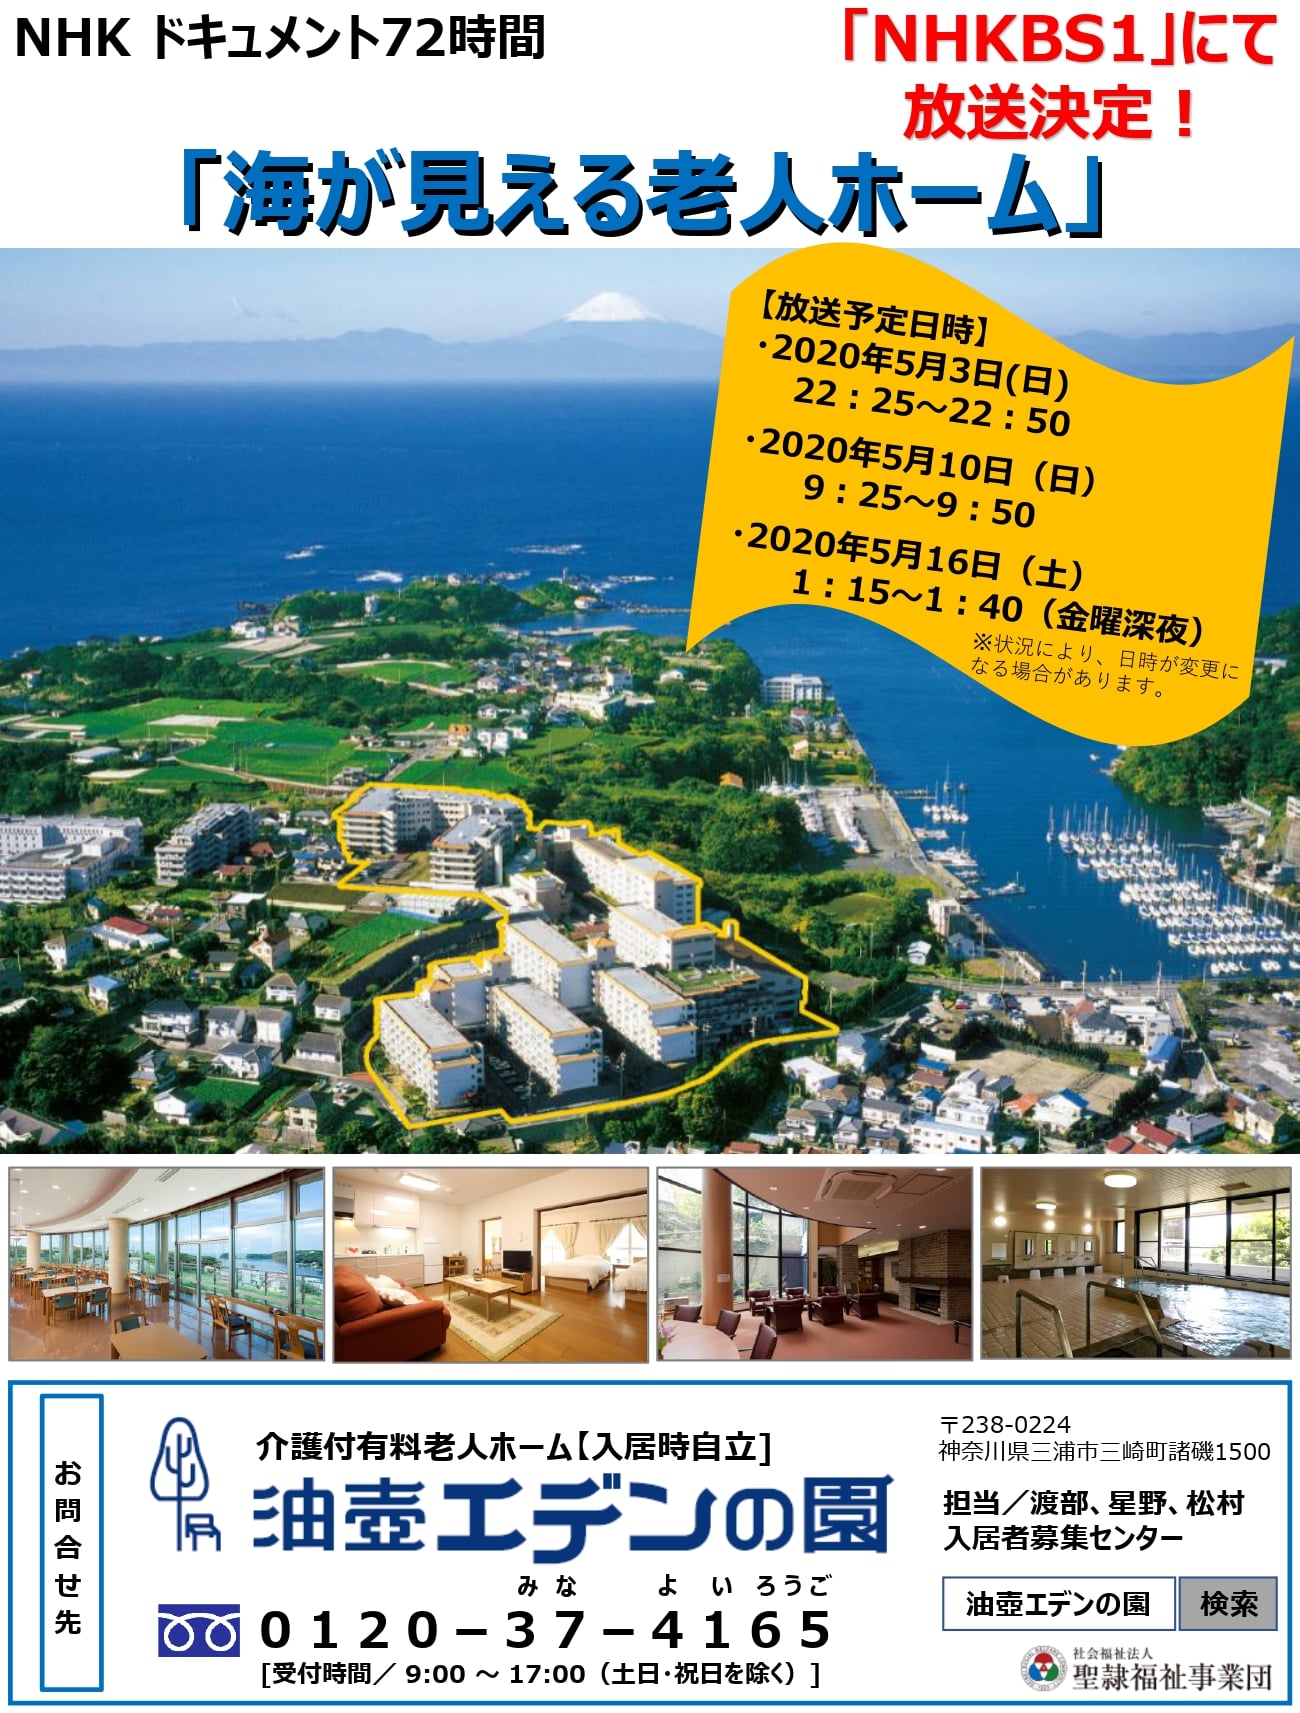 NHK-BS1にて「ドキュメント72時間『海が見える老人ホーム』」放映されました。